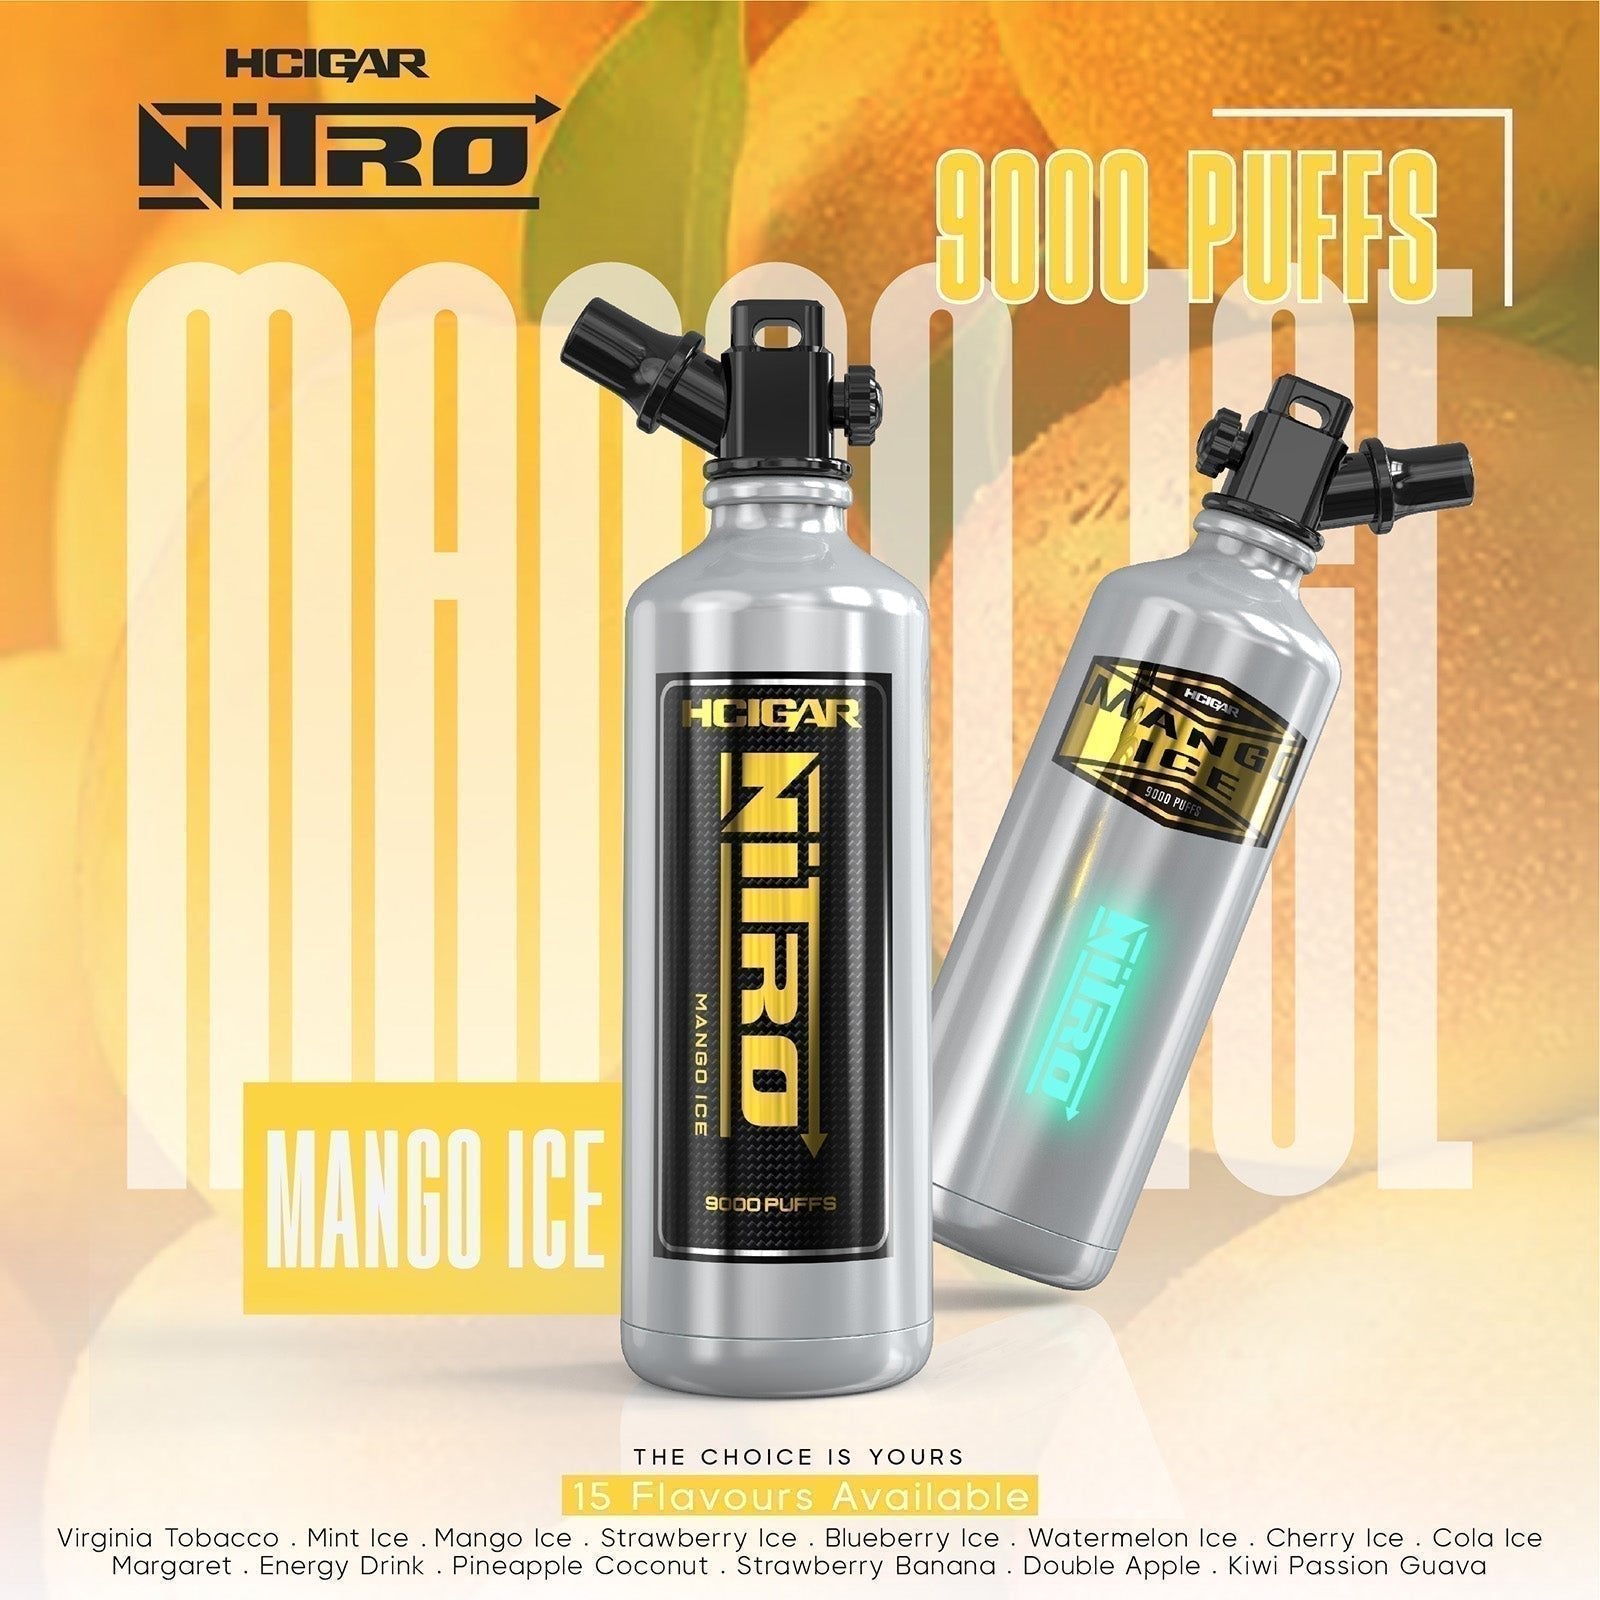 NITRO 9000 PUFFS - MANGO ICE - HAPPYTRAIL